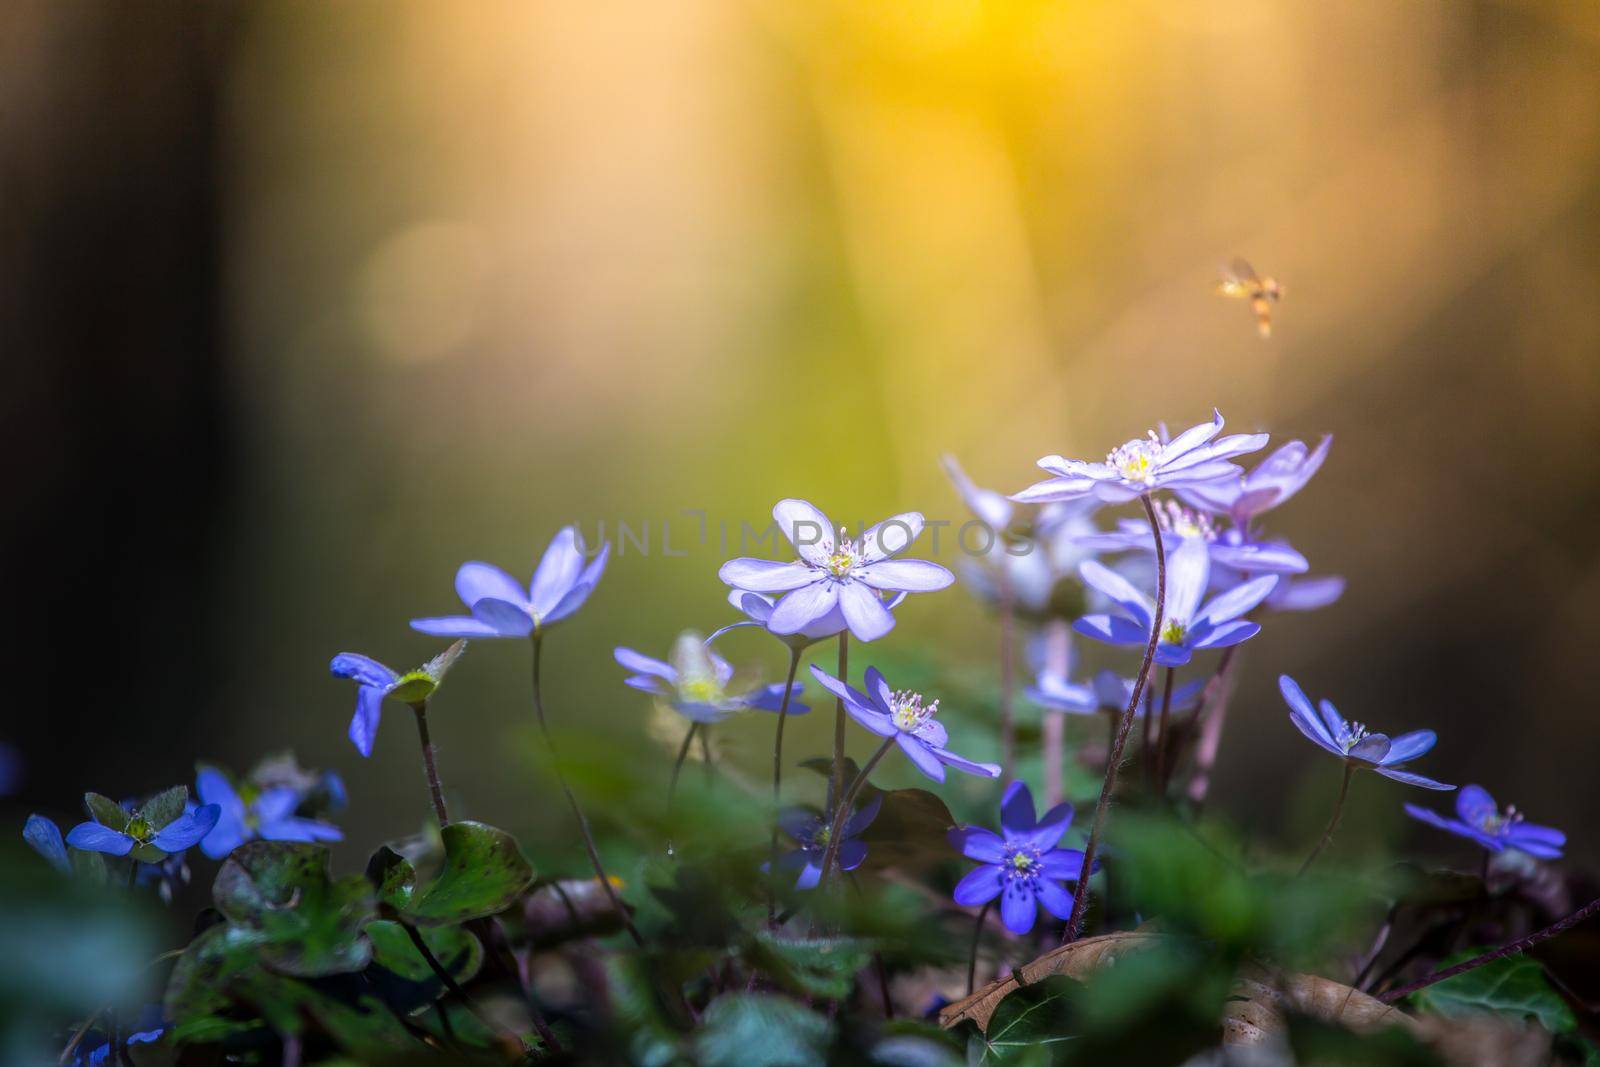 Magic spring atmosphere: Close up of violet spring flowers, liverleaf or hepatica by Daxenbichler